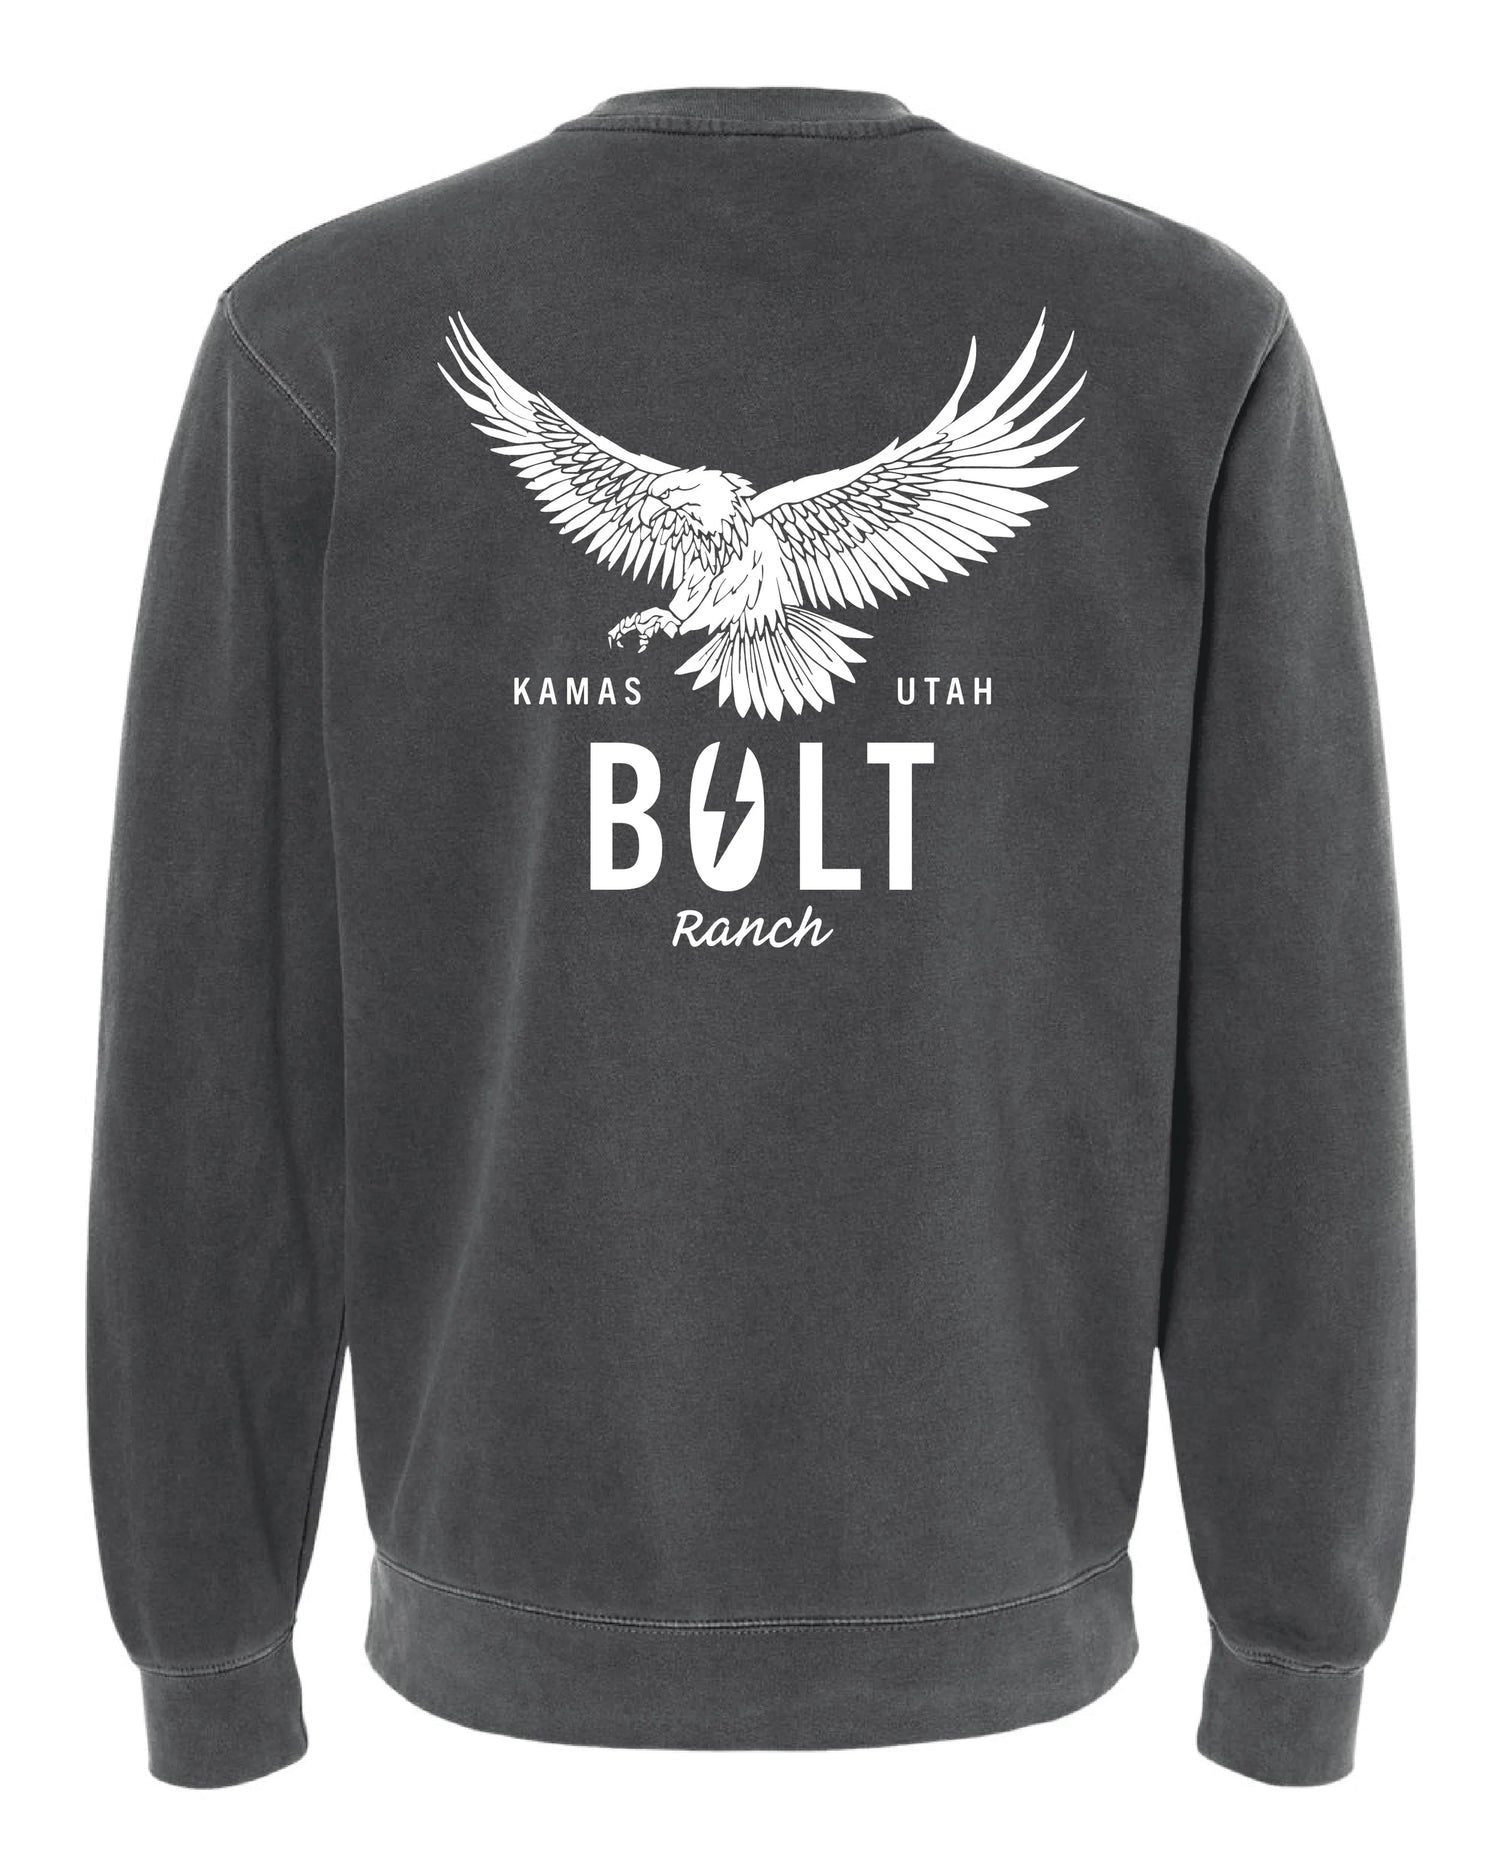 Bolt Ranch Adult Crew Neck Sweatshirt - Black and Cement